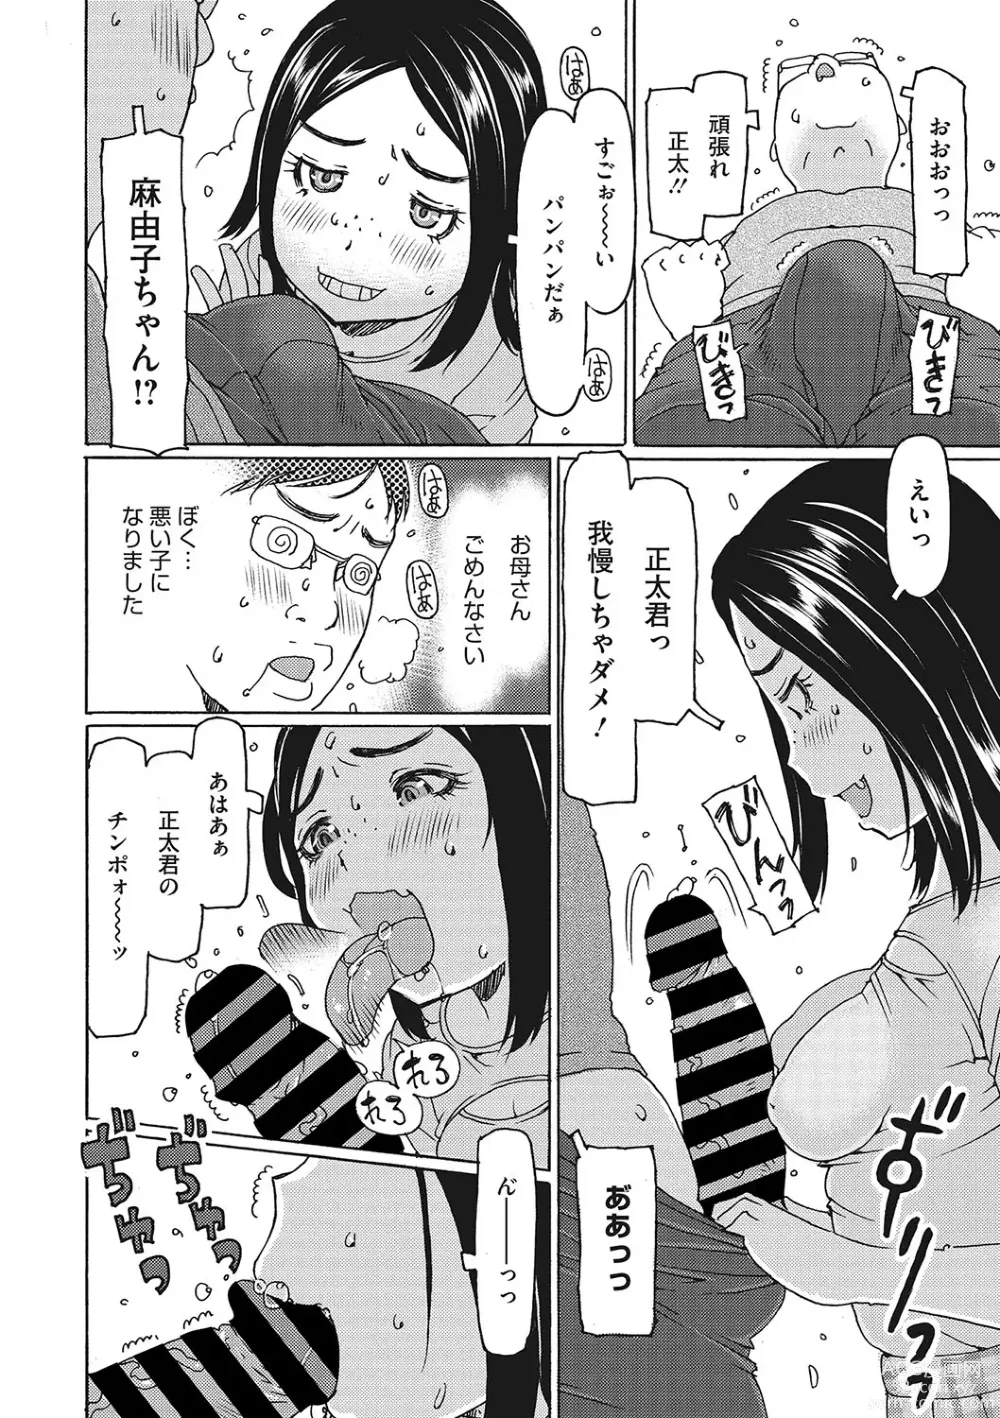 Page 7 of manga Little Girl Strike Vol. 29